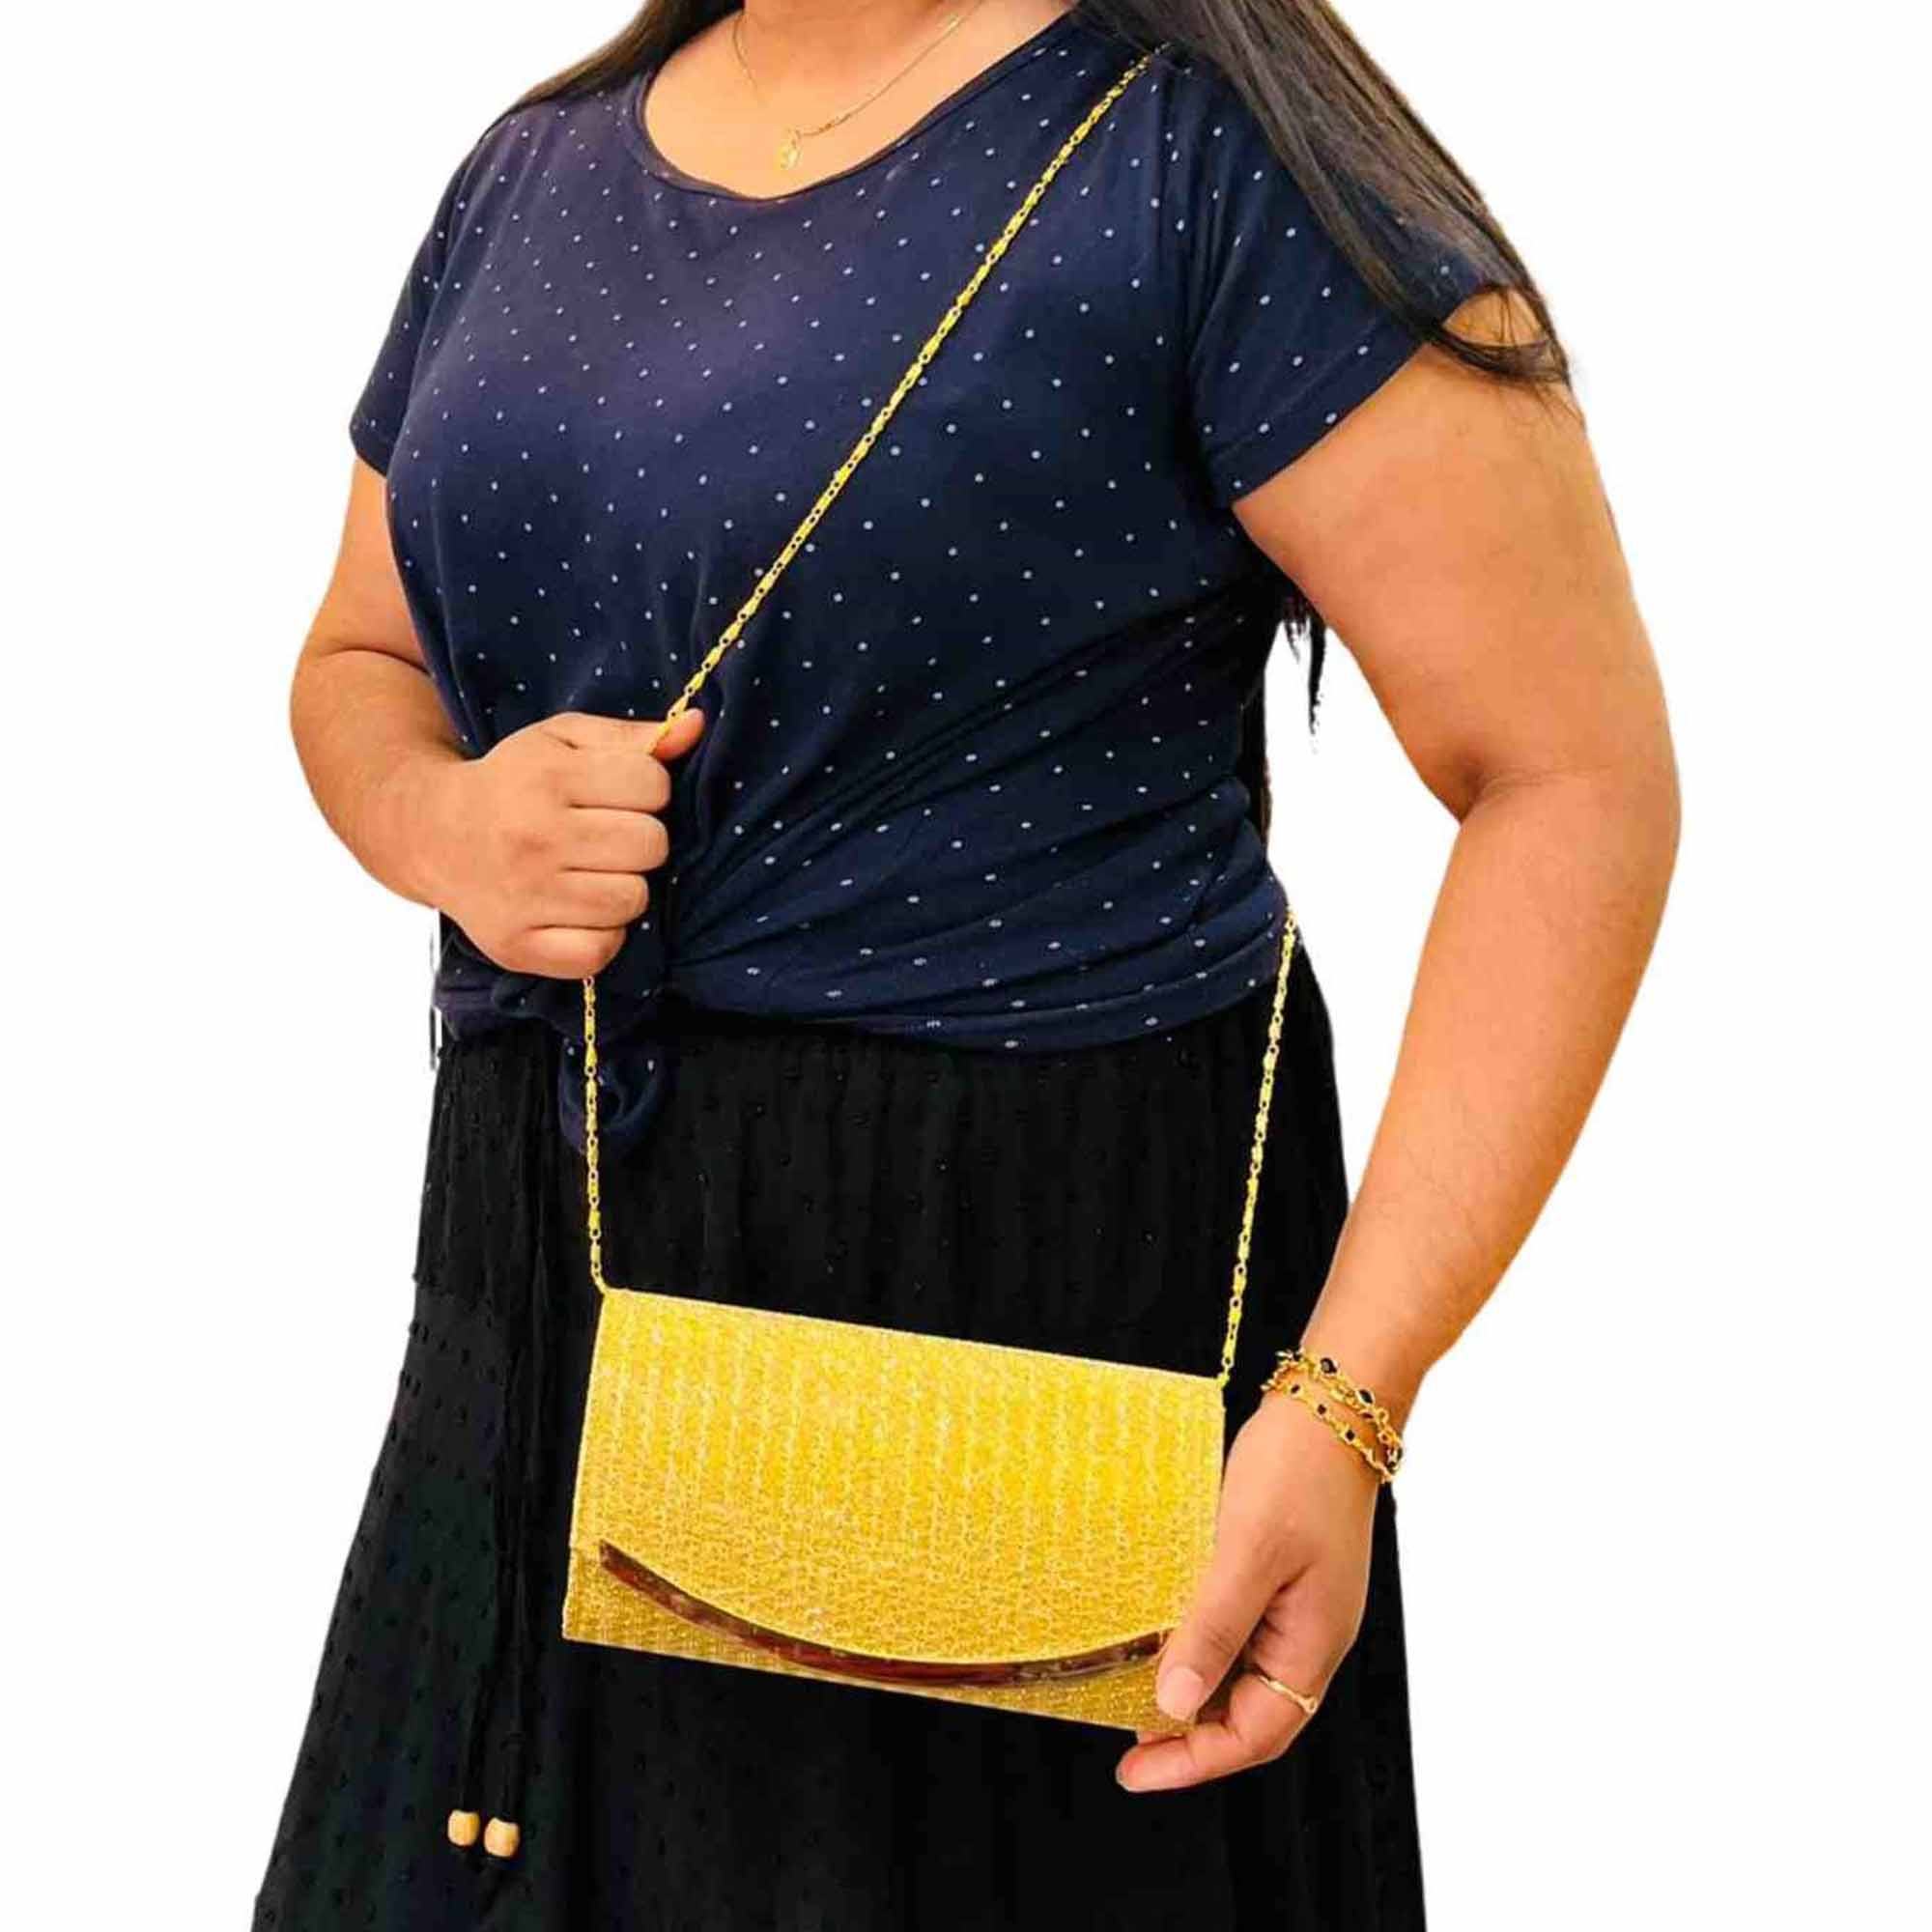 Bridal Wedding Lady Satin Gold Bags Lace chain Shoulder Bag Purse Party Girl Handbags (NBLK) Clutches NowBuy.lk 3